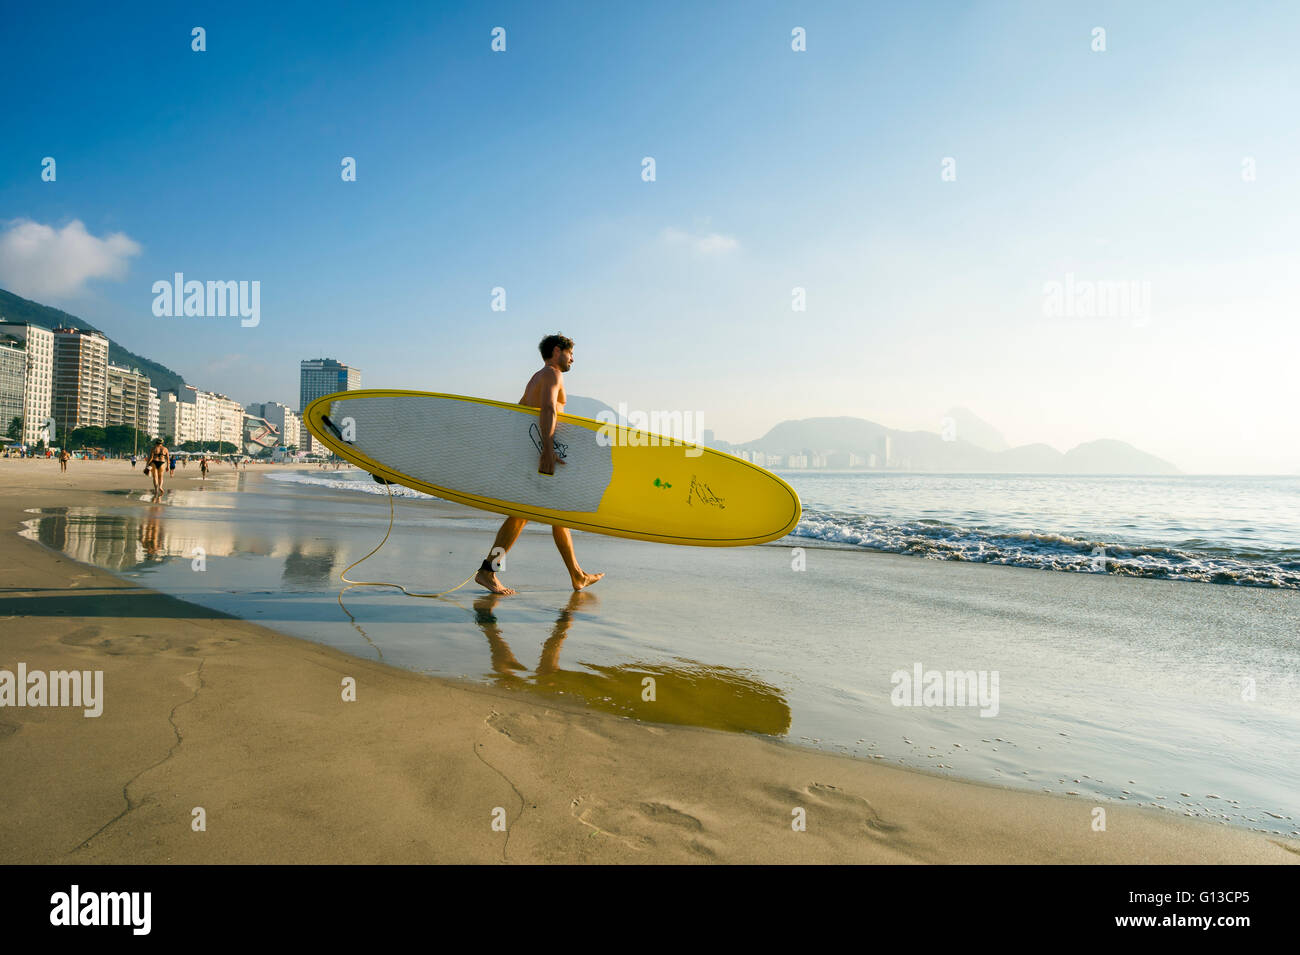 RIO DE JANEIRO - APRIL 5, 2016: A young Brazilian man carries a stand up paddle longboard surfboard on Copacabana Beach. Stock Photo